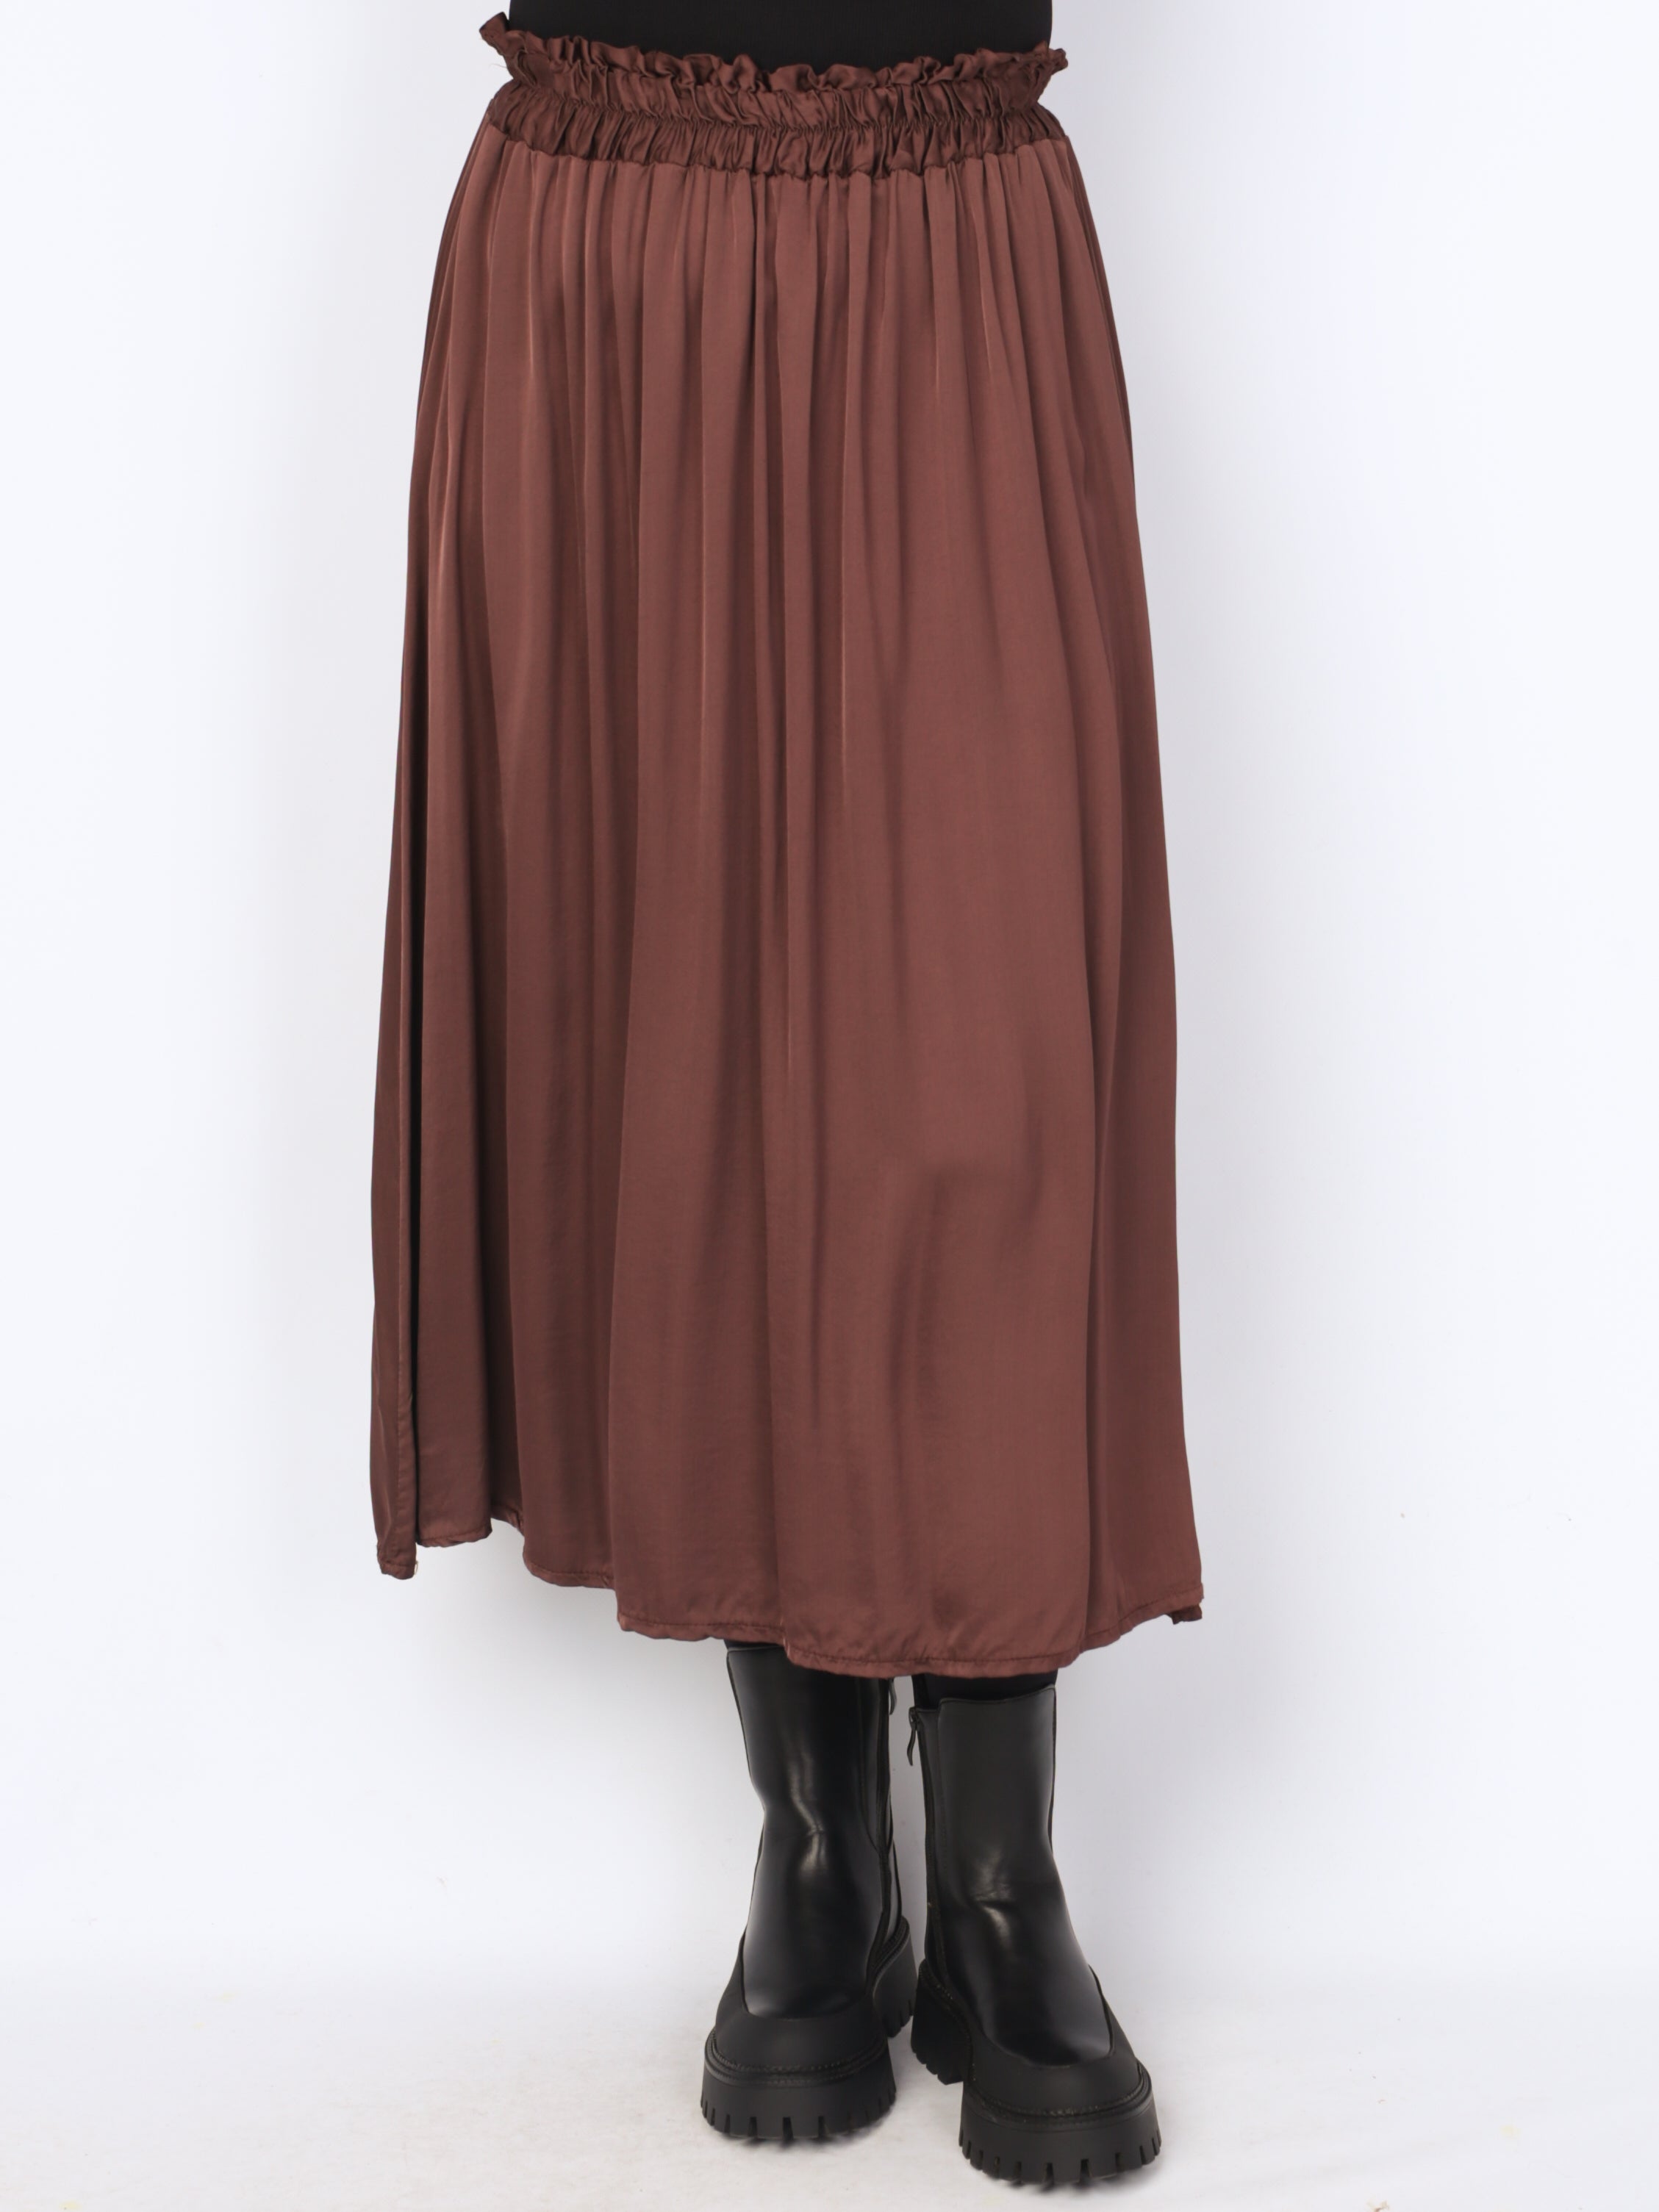 Shiny short skirt with elastic